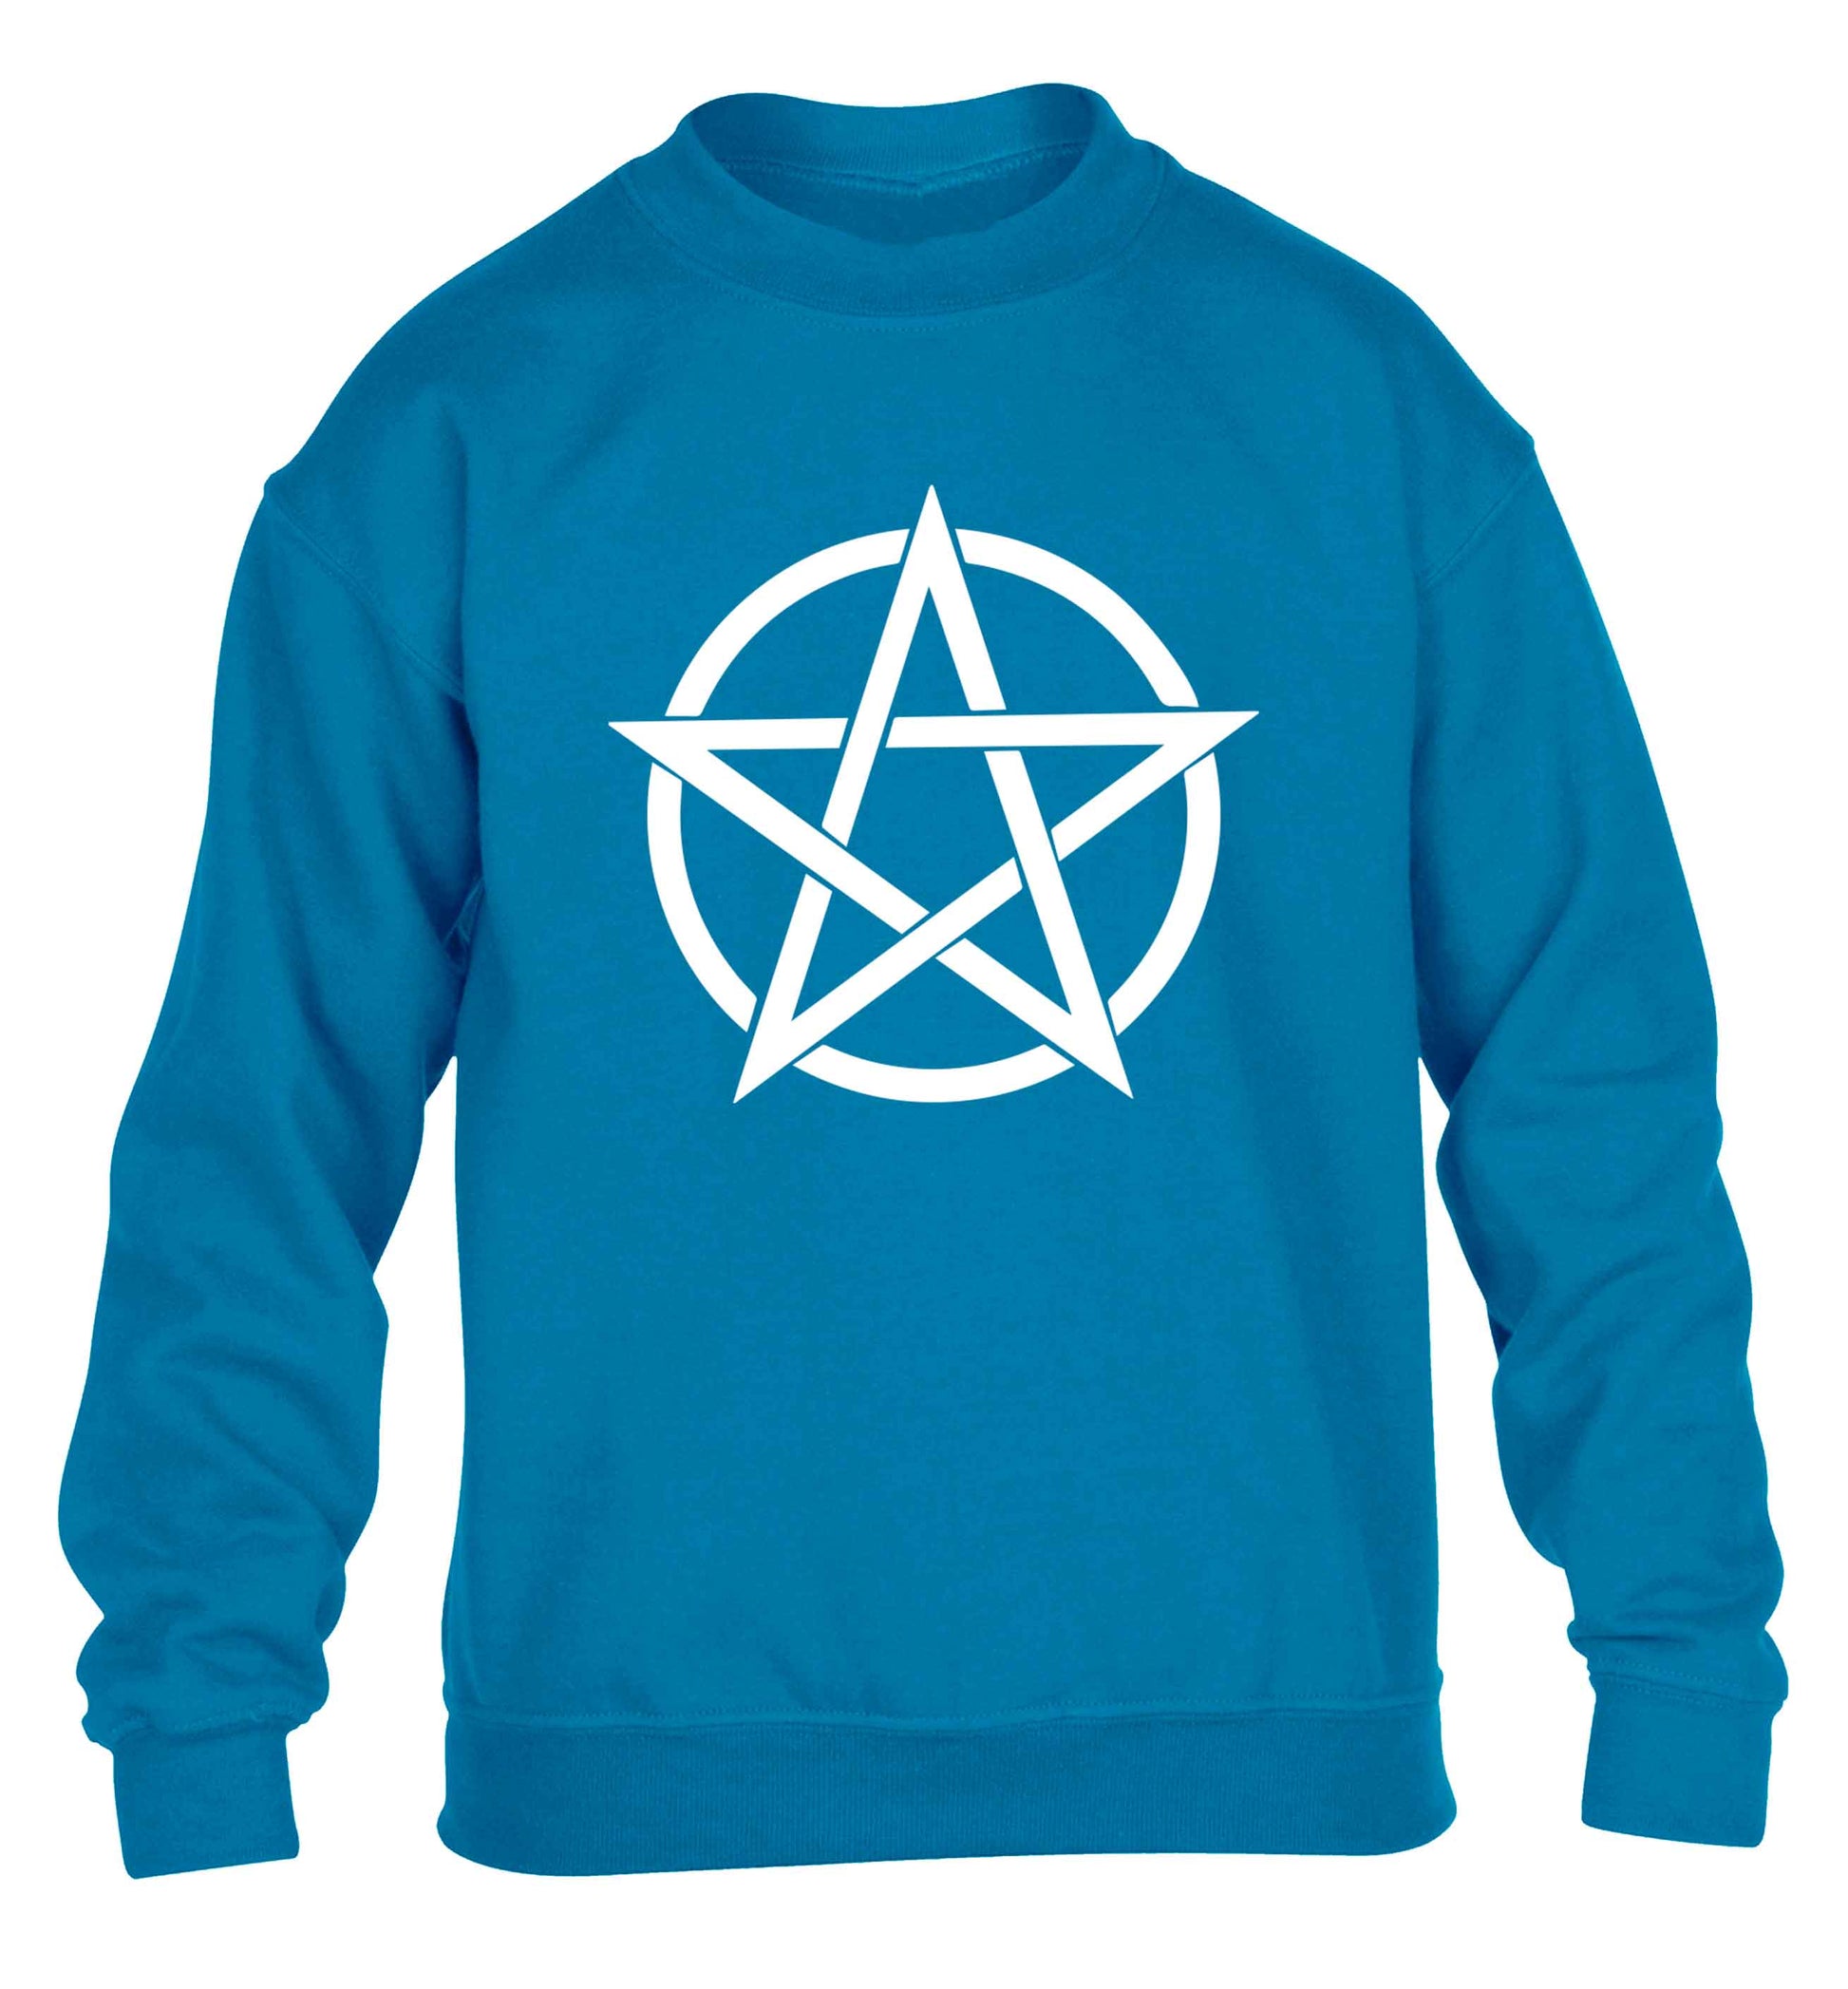 Pentagram symbol children's blue sweater 12-13 Years